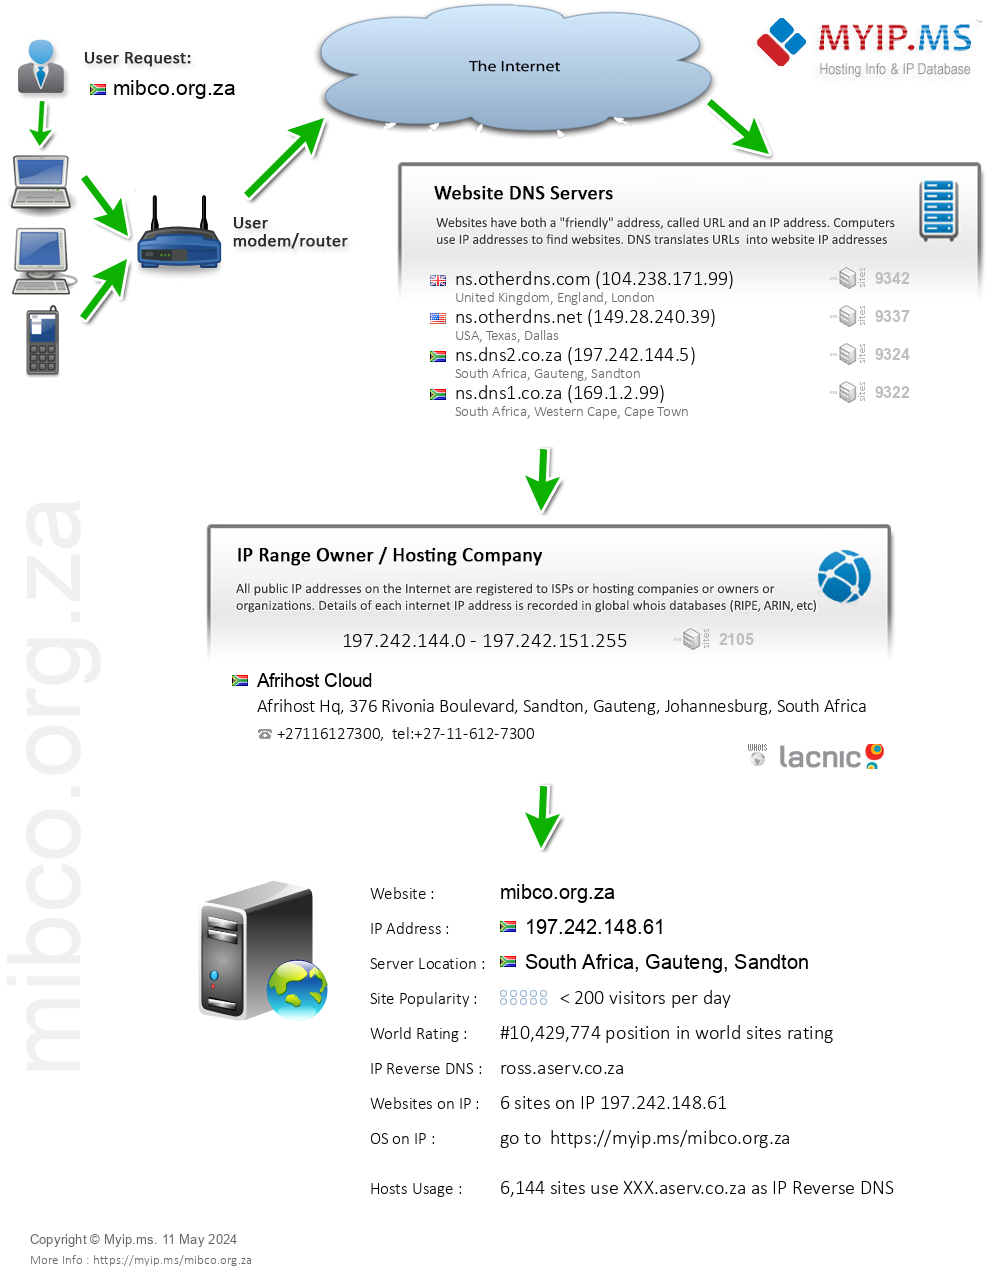 Mibco.org.za - Website Hosting Visual IP Diagram